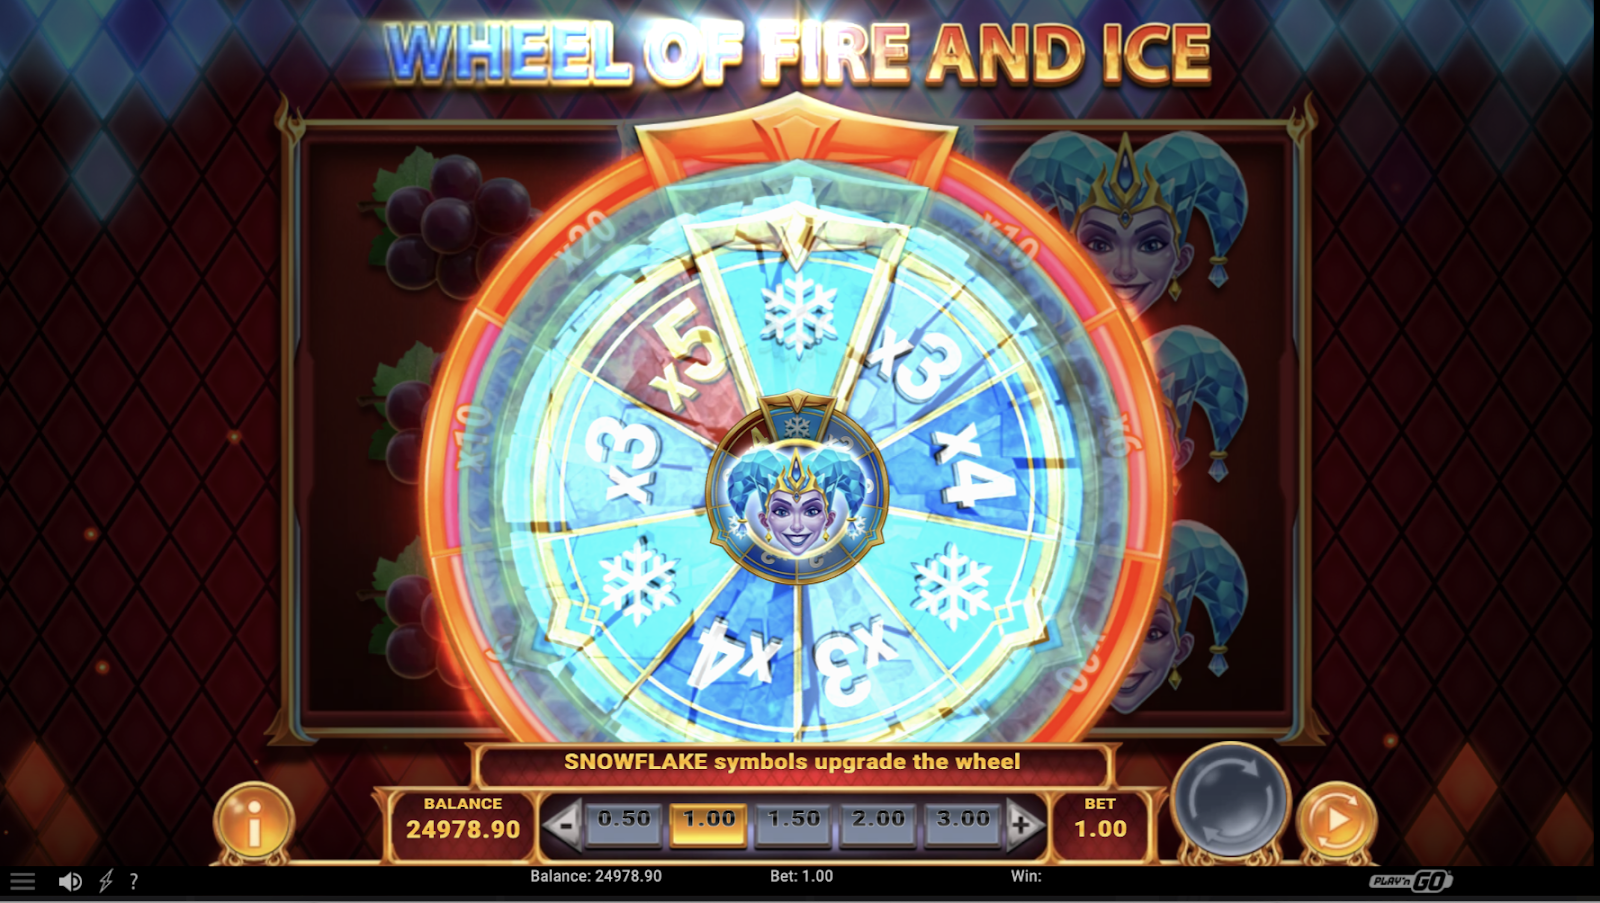 Fire Joker Freeze wheel of fire and ice